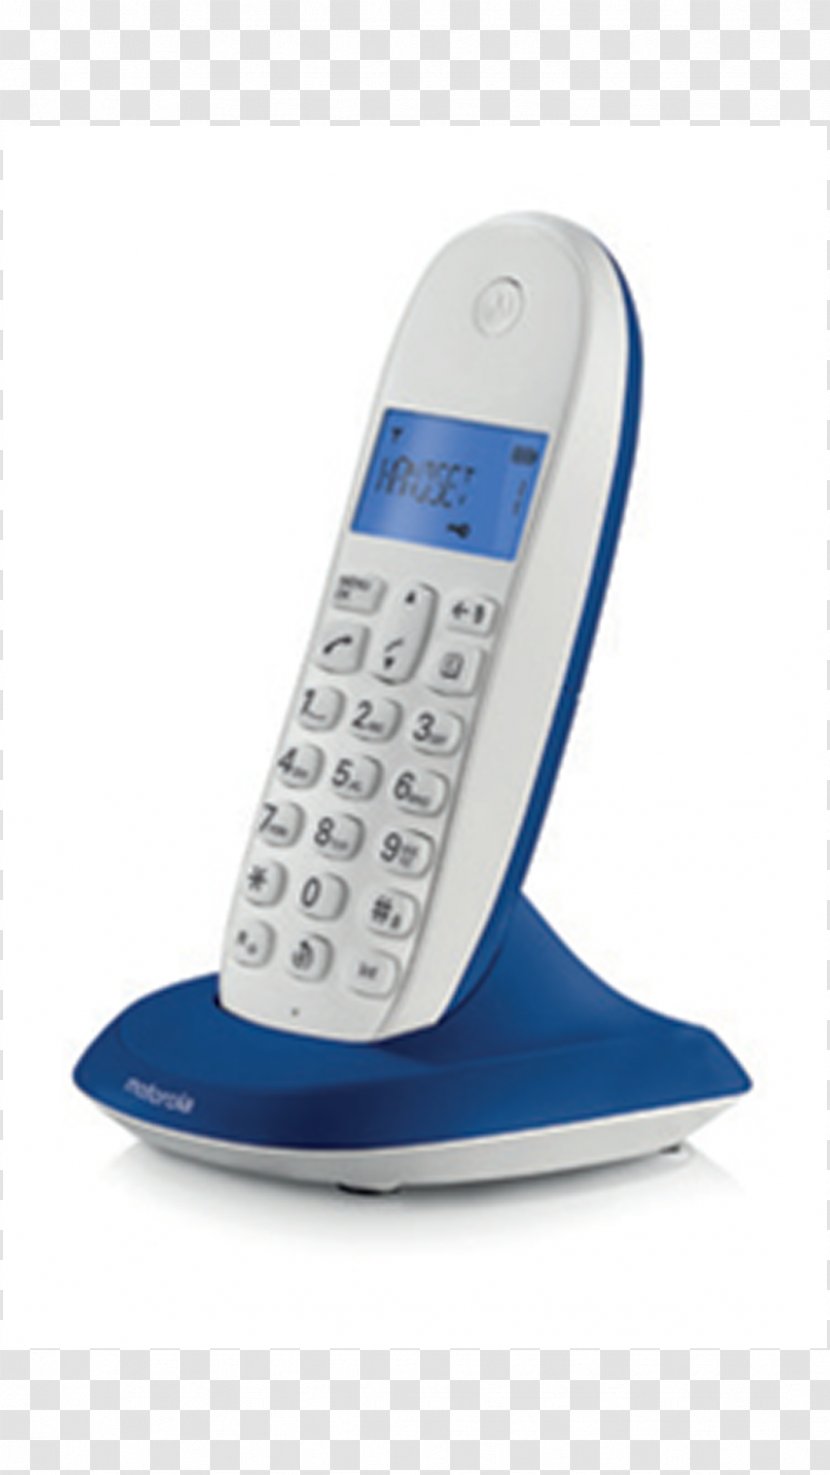 Cordless Telephone Home & Business Phones Digital Enhanced Telecommunications Mobile - Motorola Transparent PNG